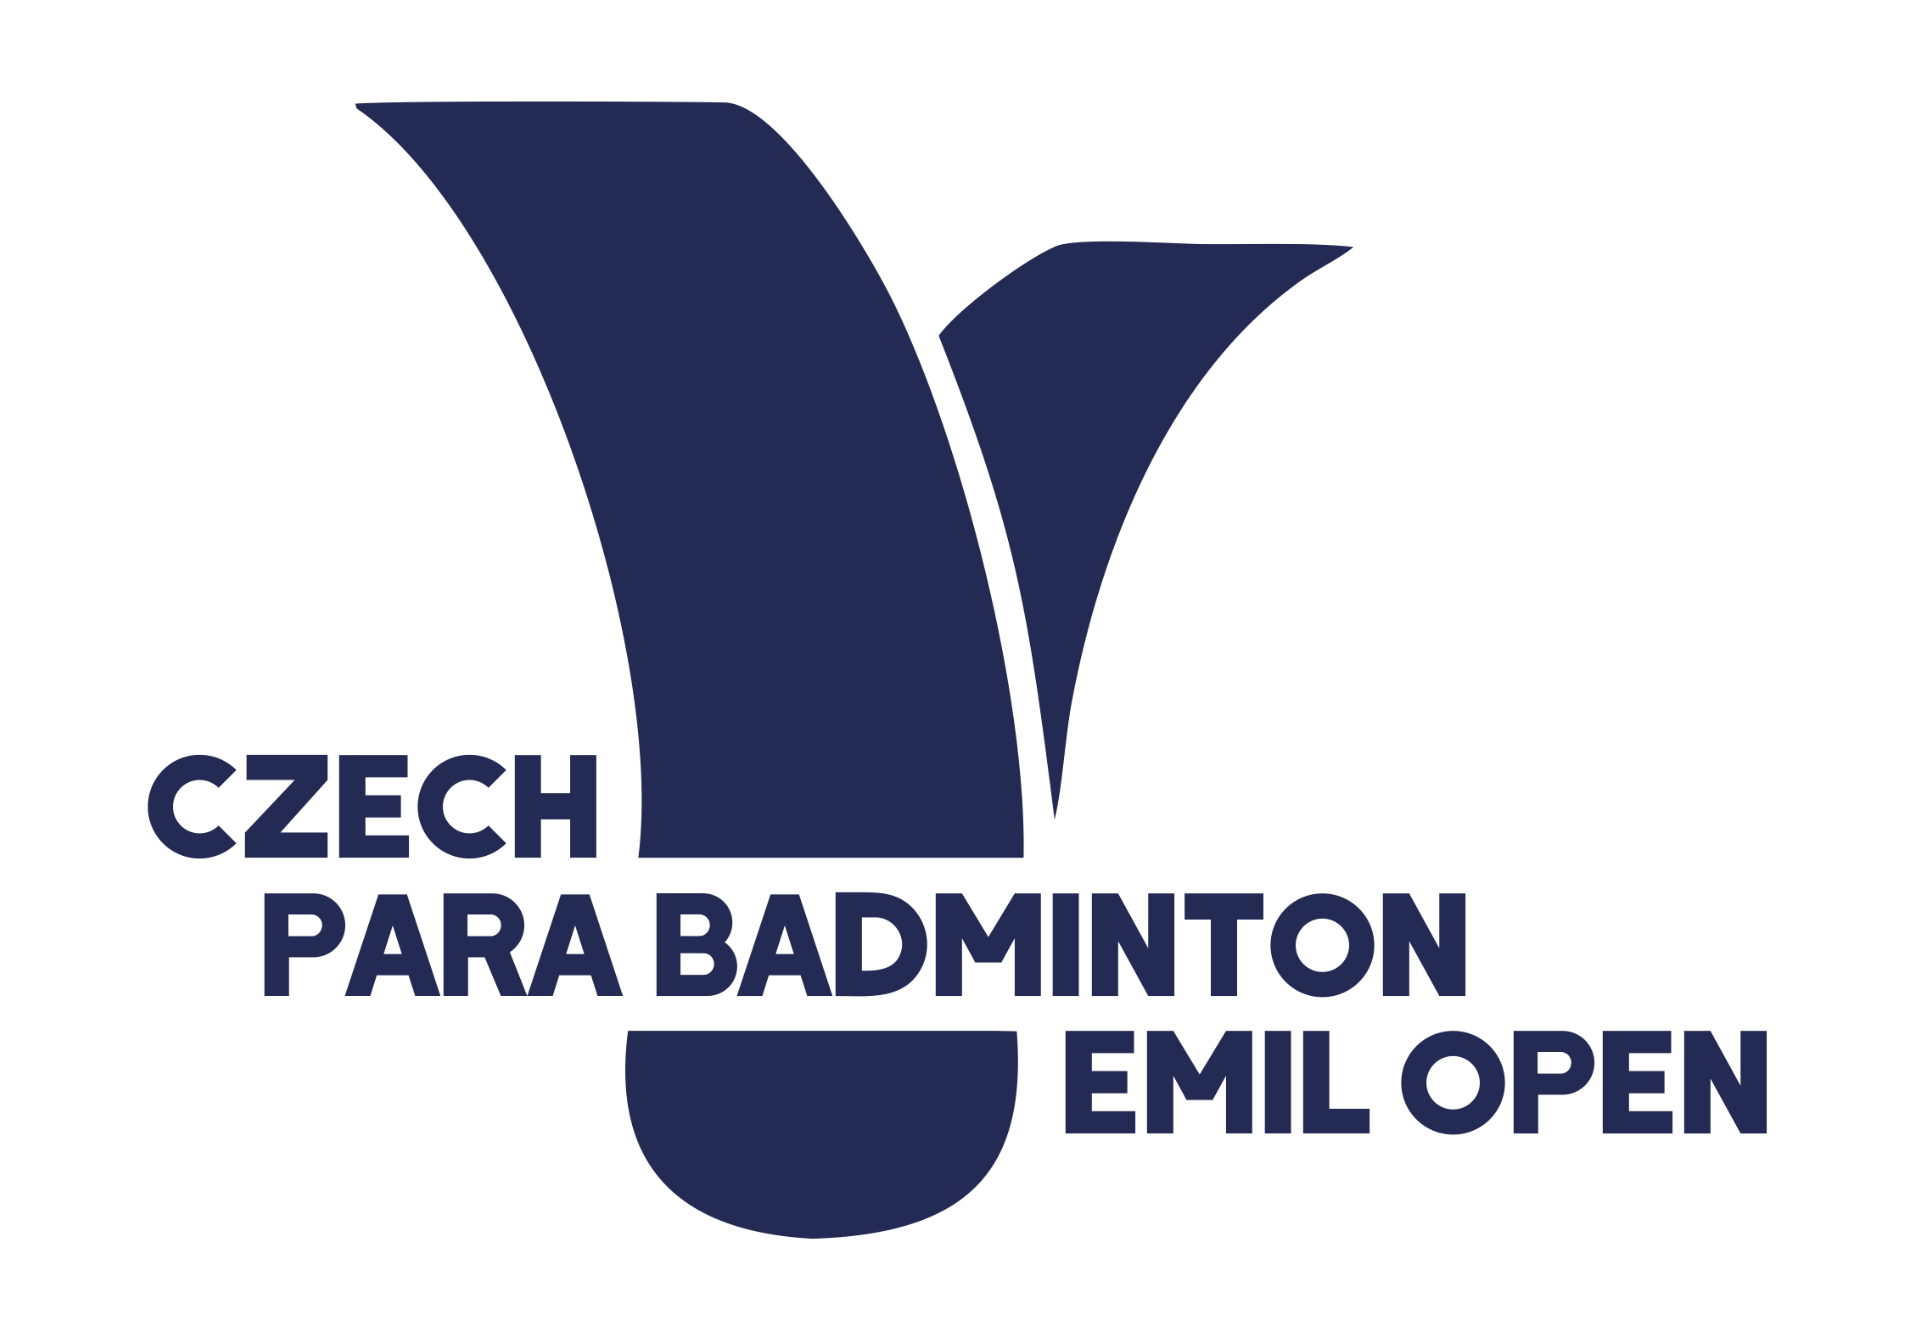 CzechmParabadminton Emil Open